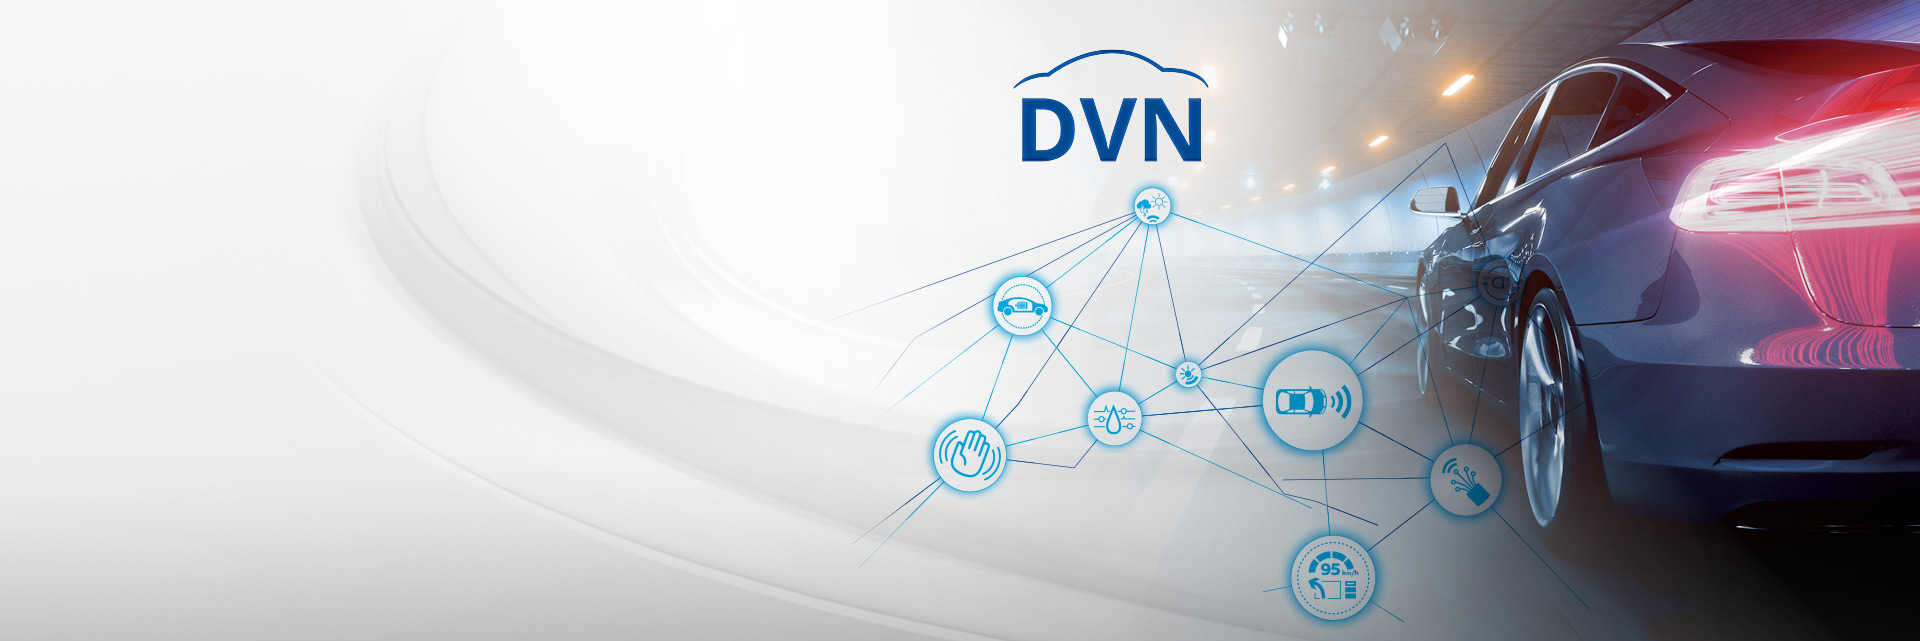 6th DVN Conference on Automotive LiDAR